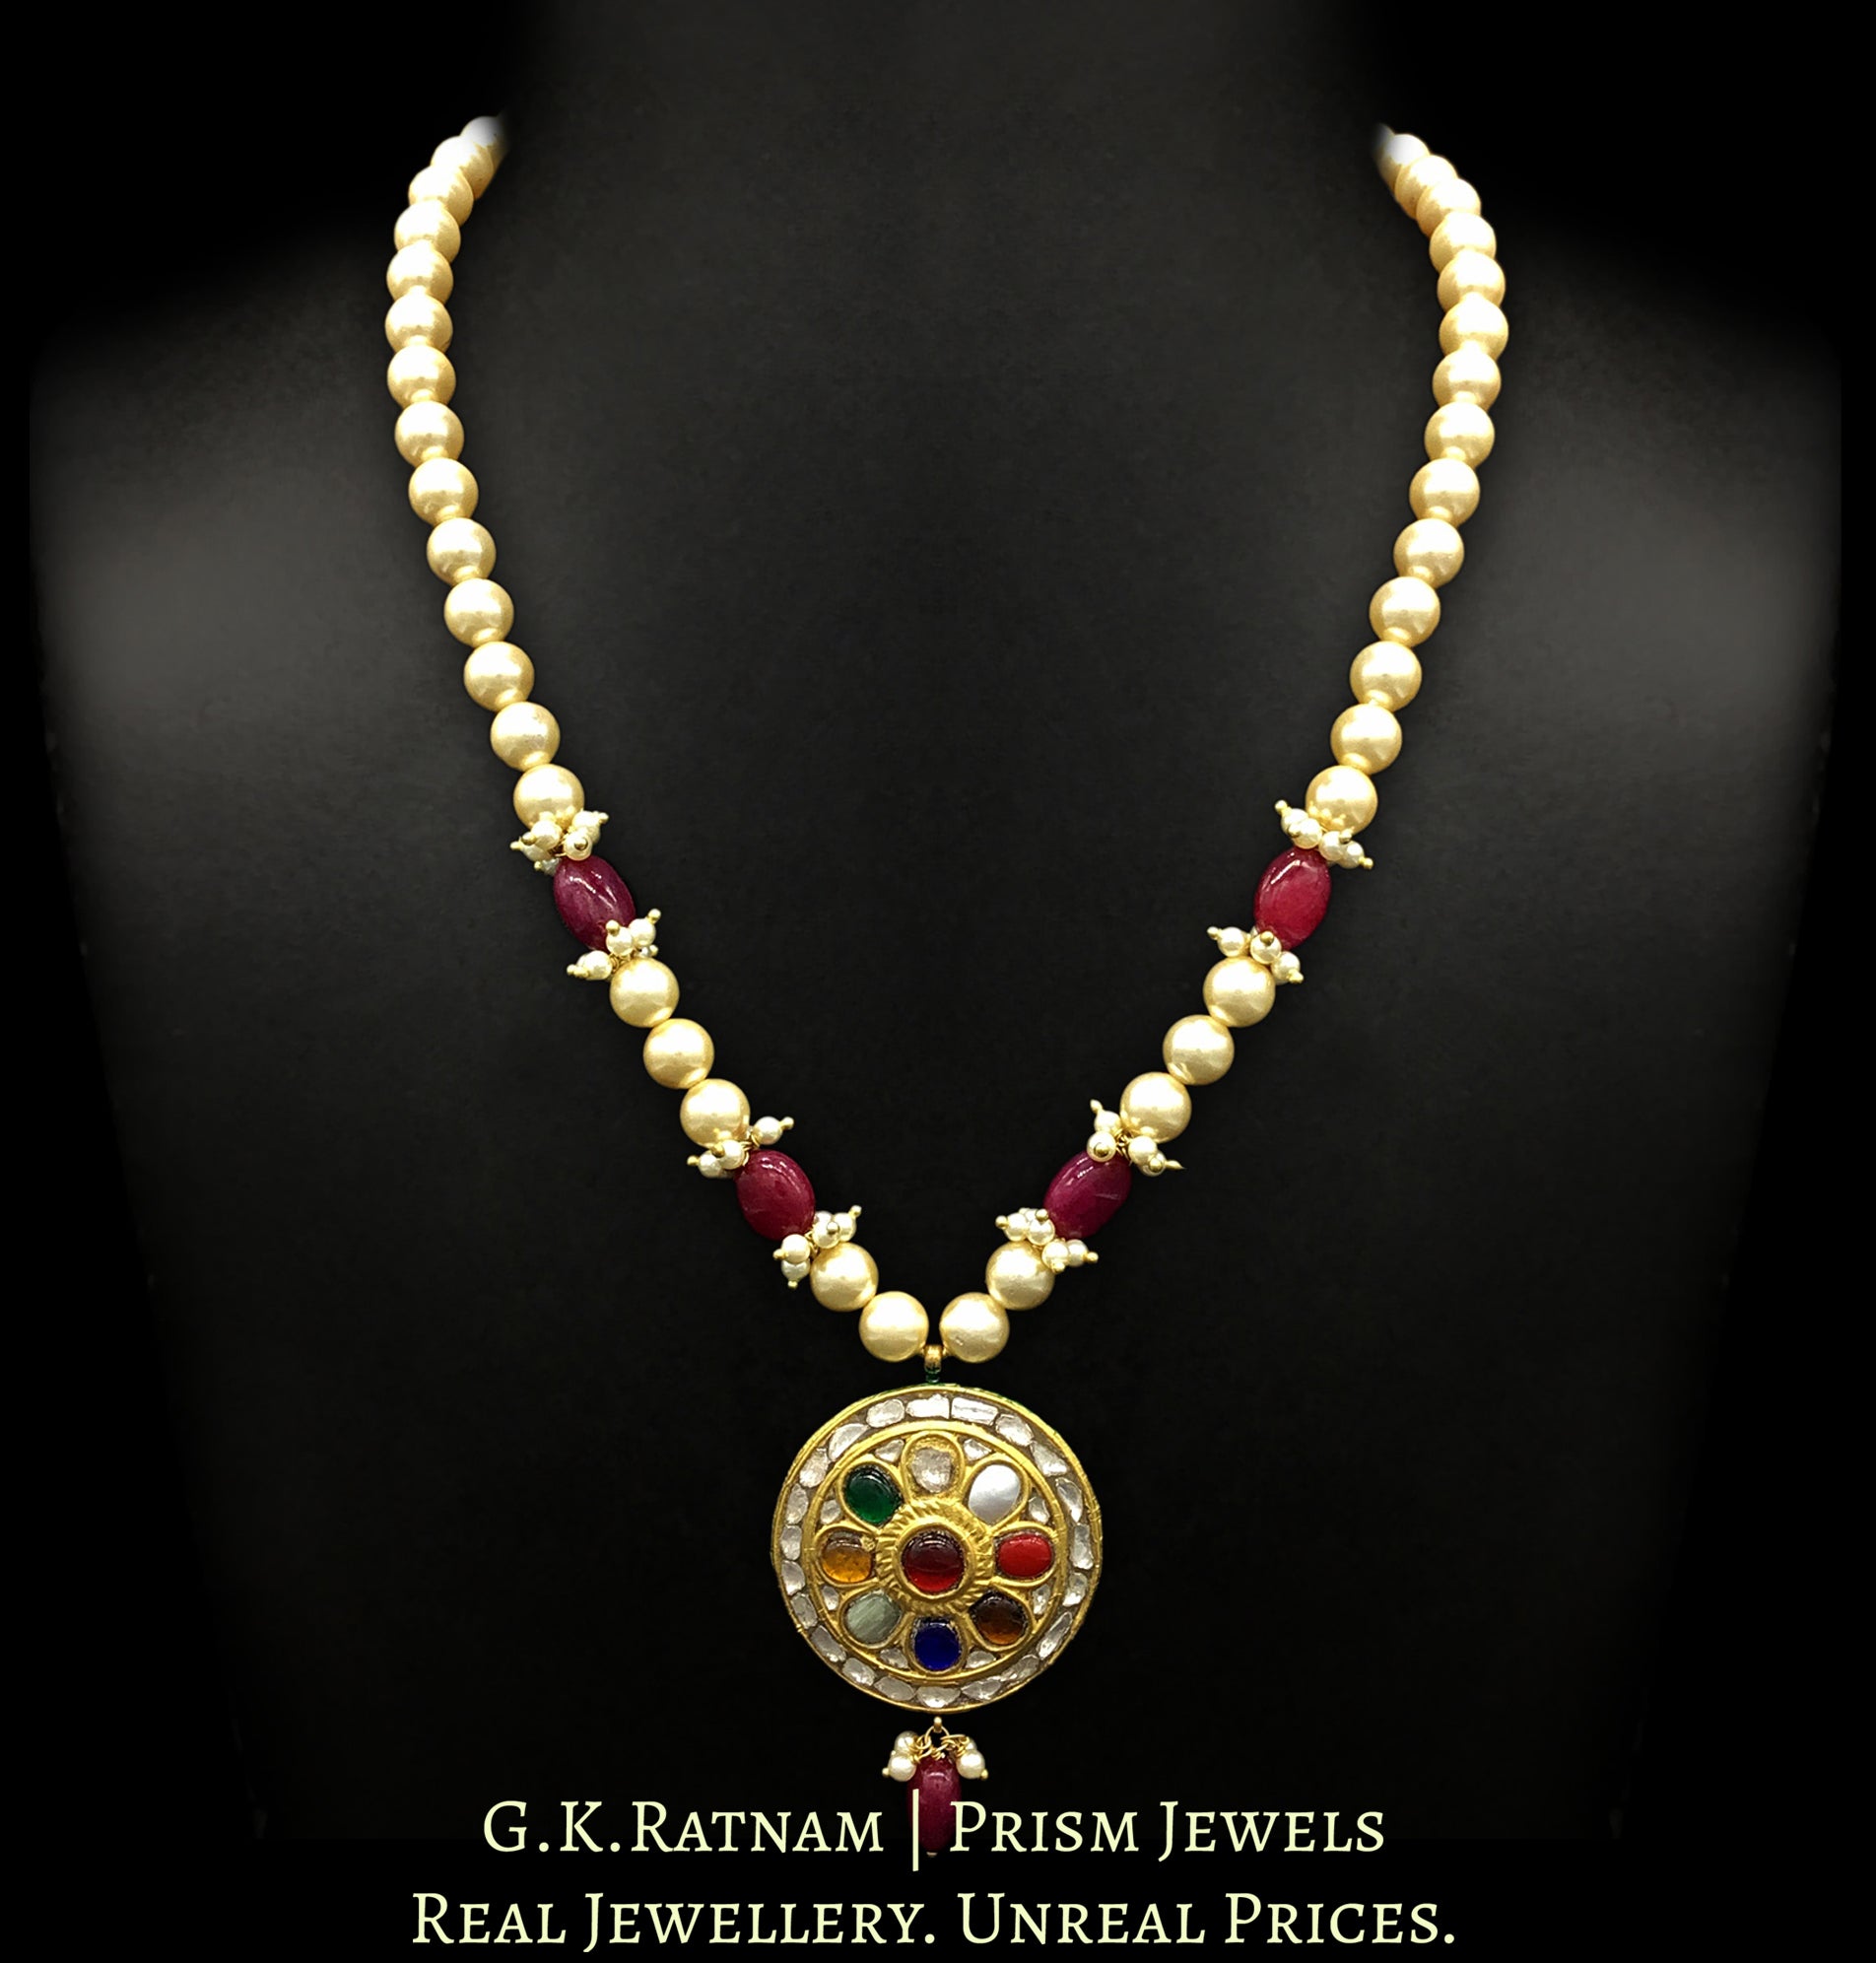 23k Gold and Diamond Polki Round Navratna Pendant with pearls and rubies - G. K. Ratnam